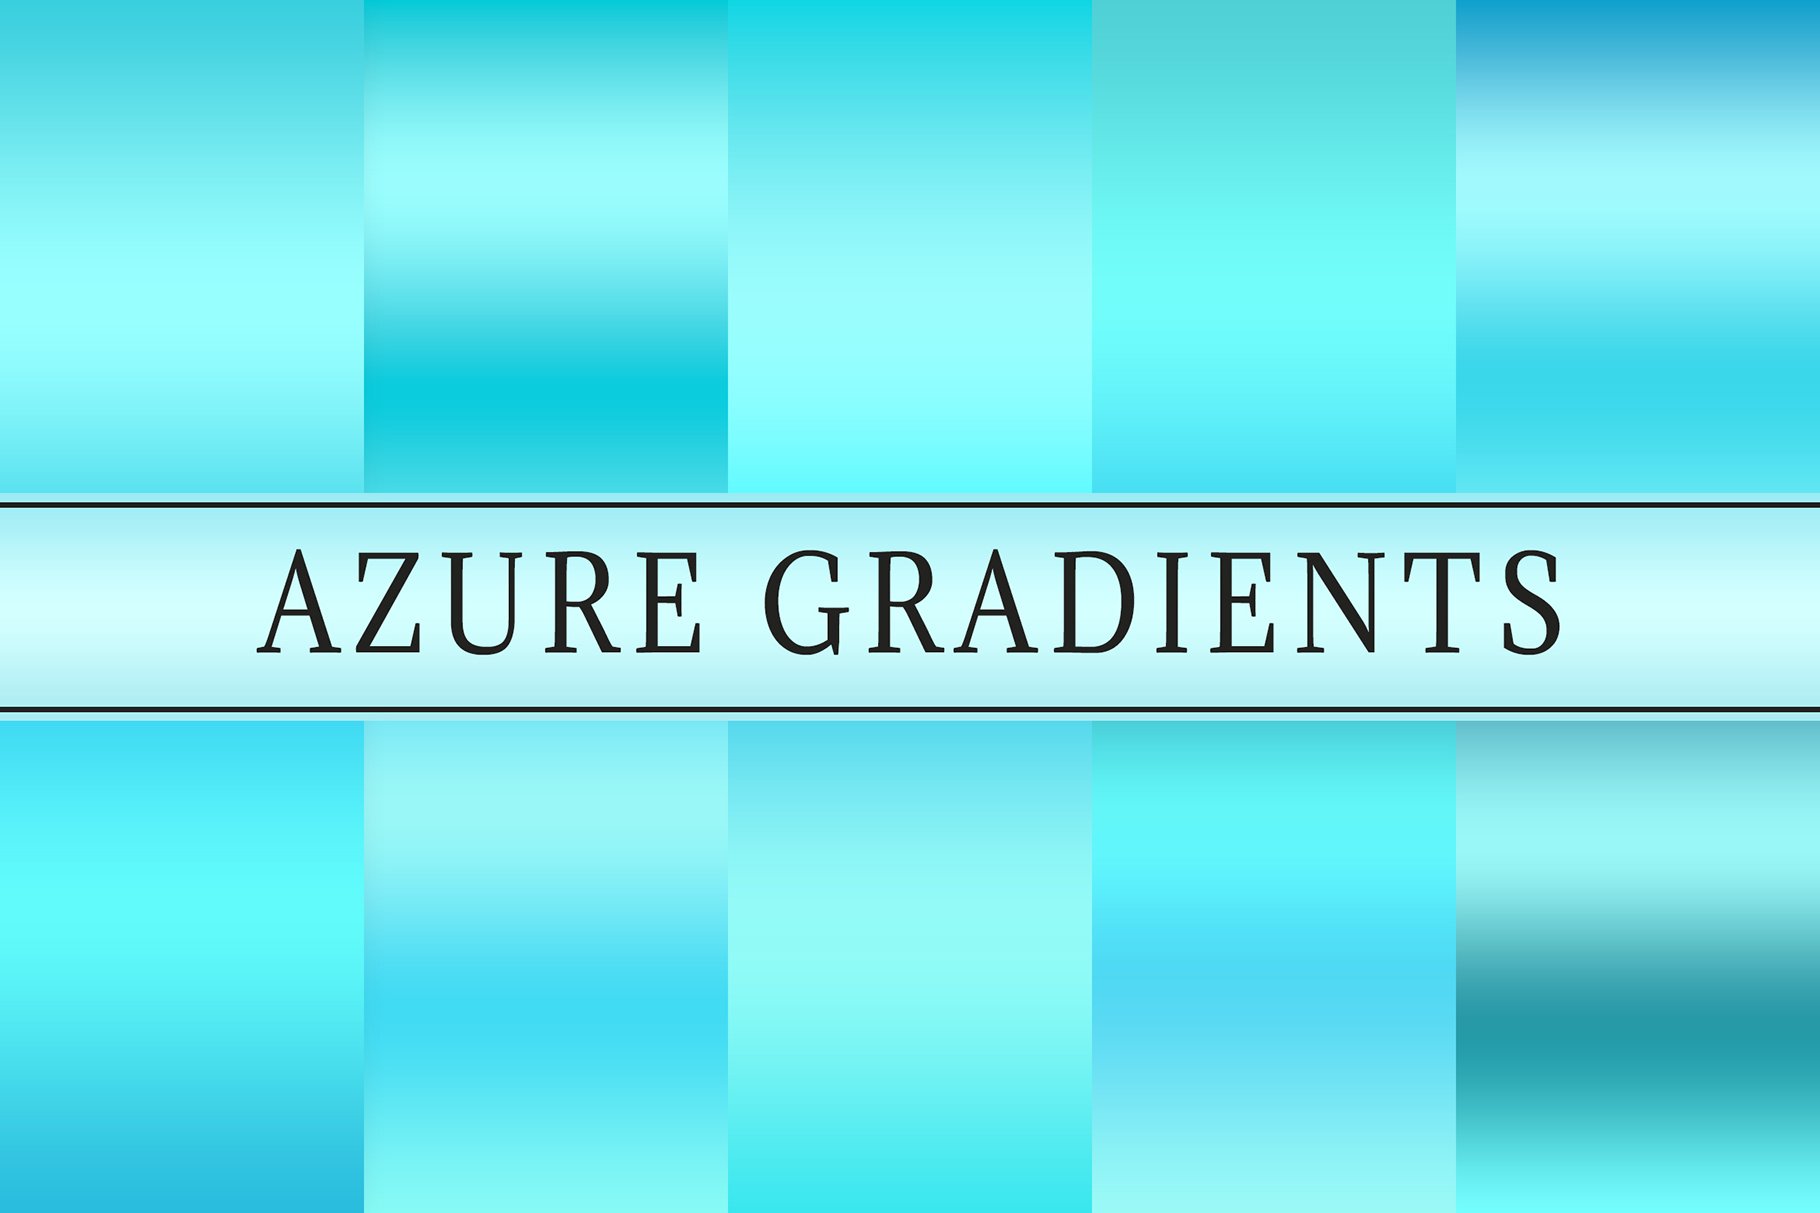 Azure Gradients cover image.